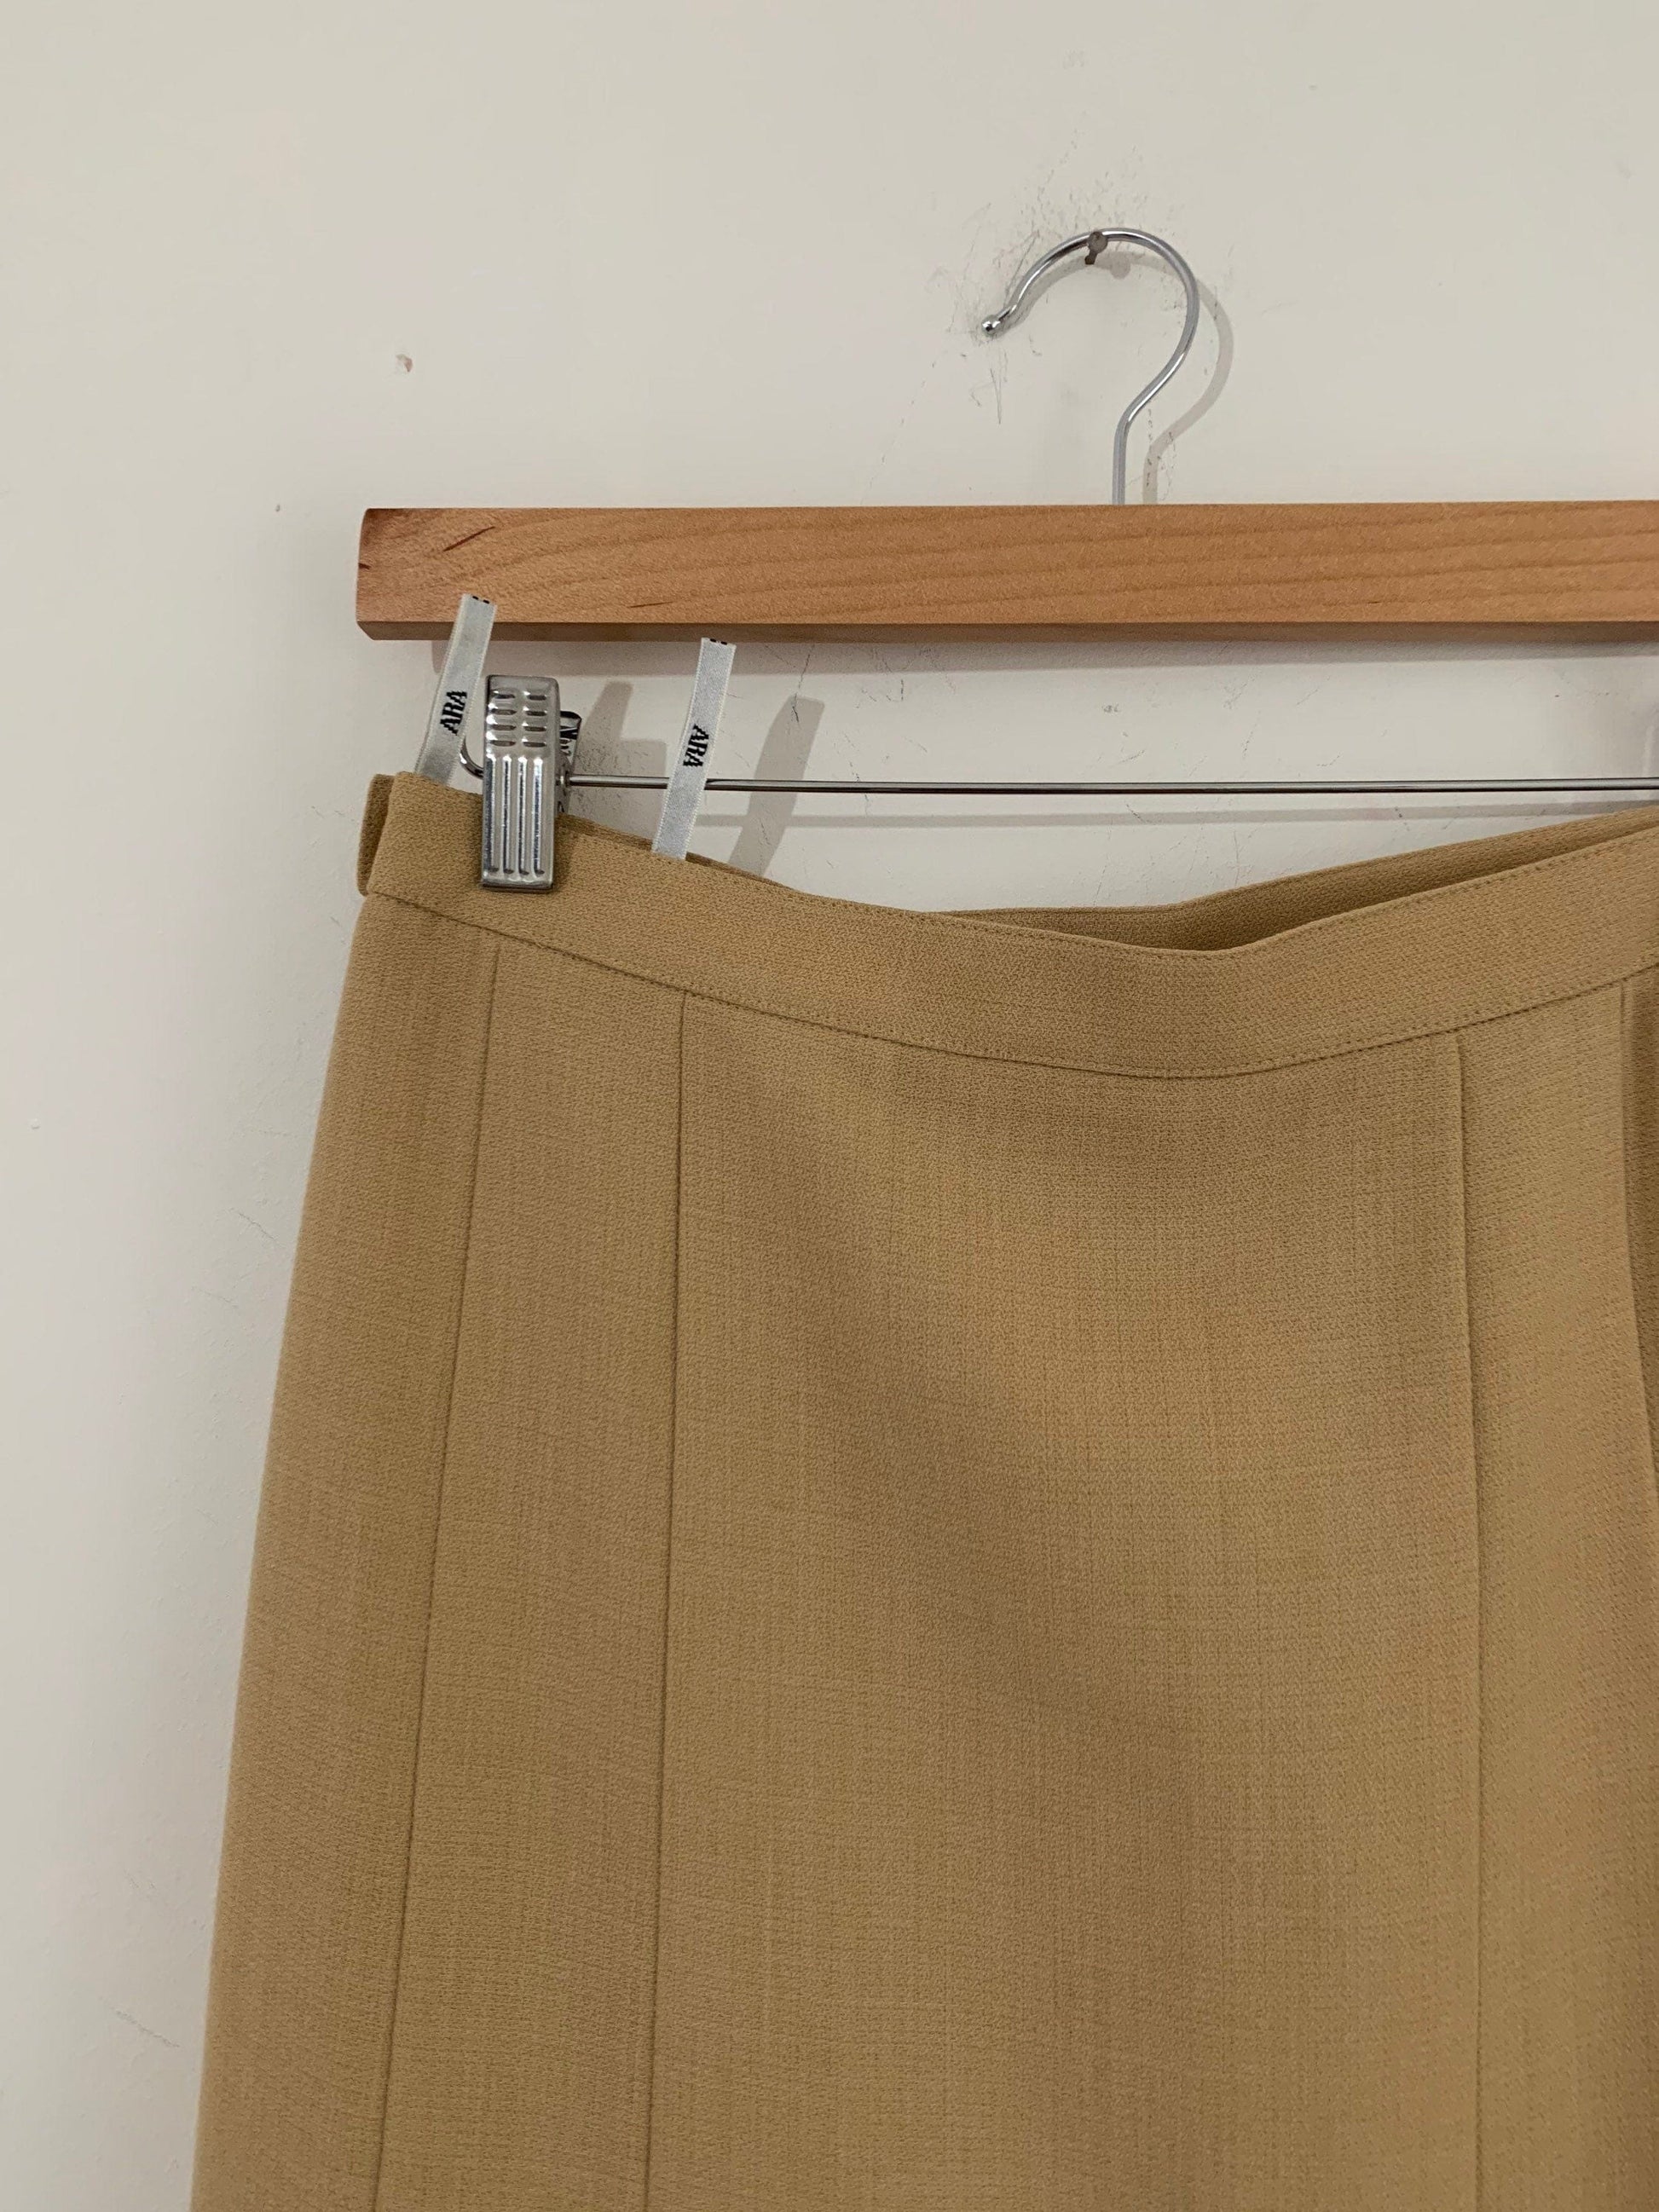 Vintage A Line Skirt BoxPleat Midi Length Dark Mustard Yellow UK 12-14